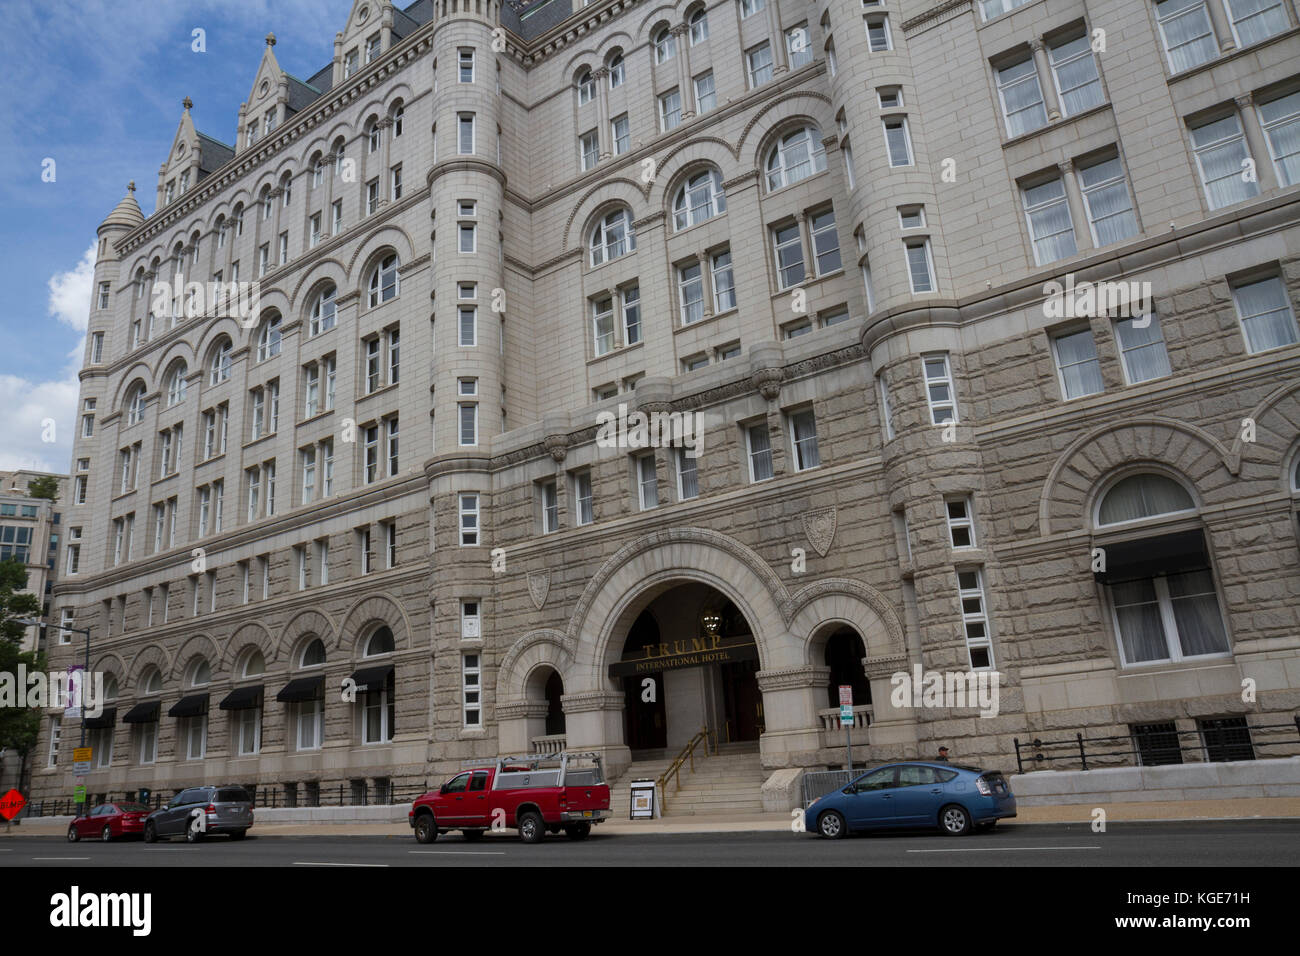 The Trump International Hotel in Washington DC, United States. Stock Photo